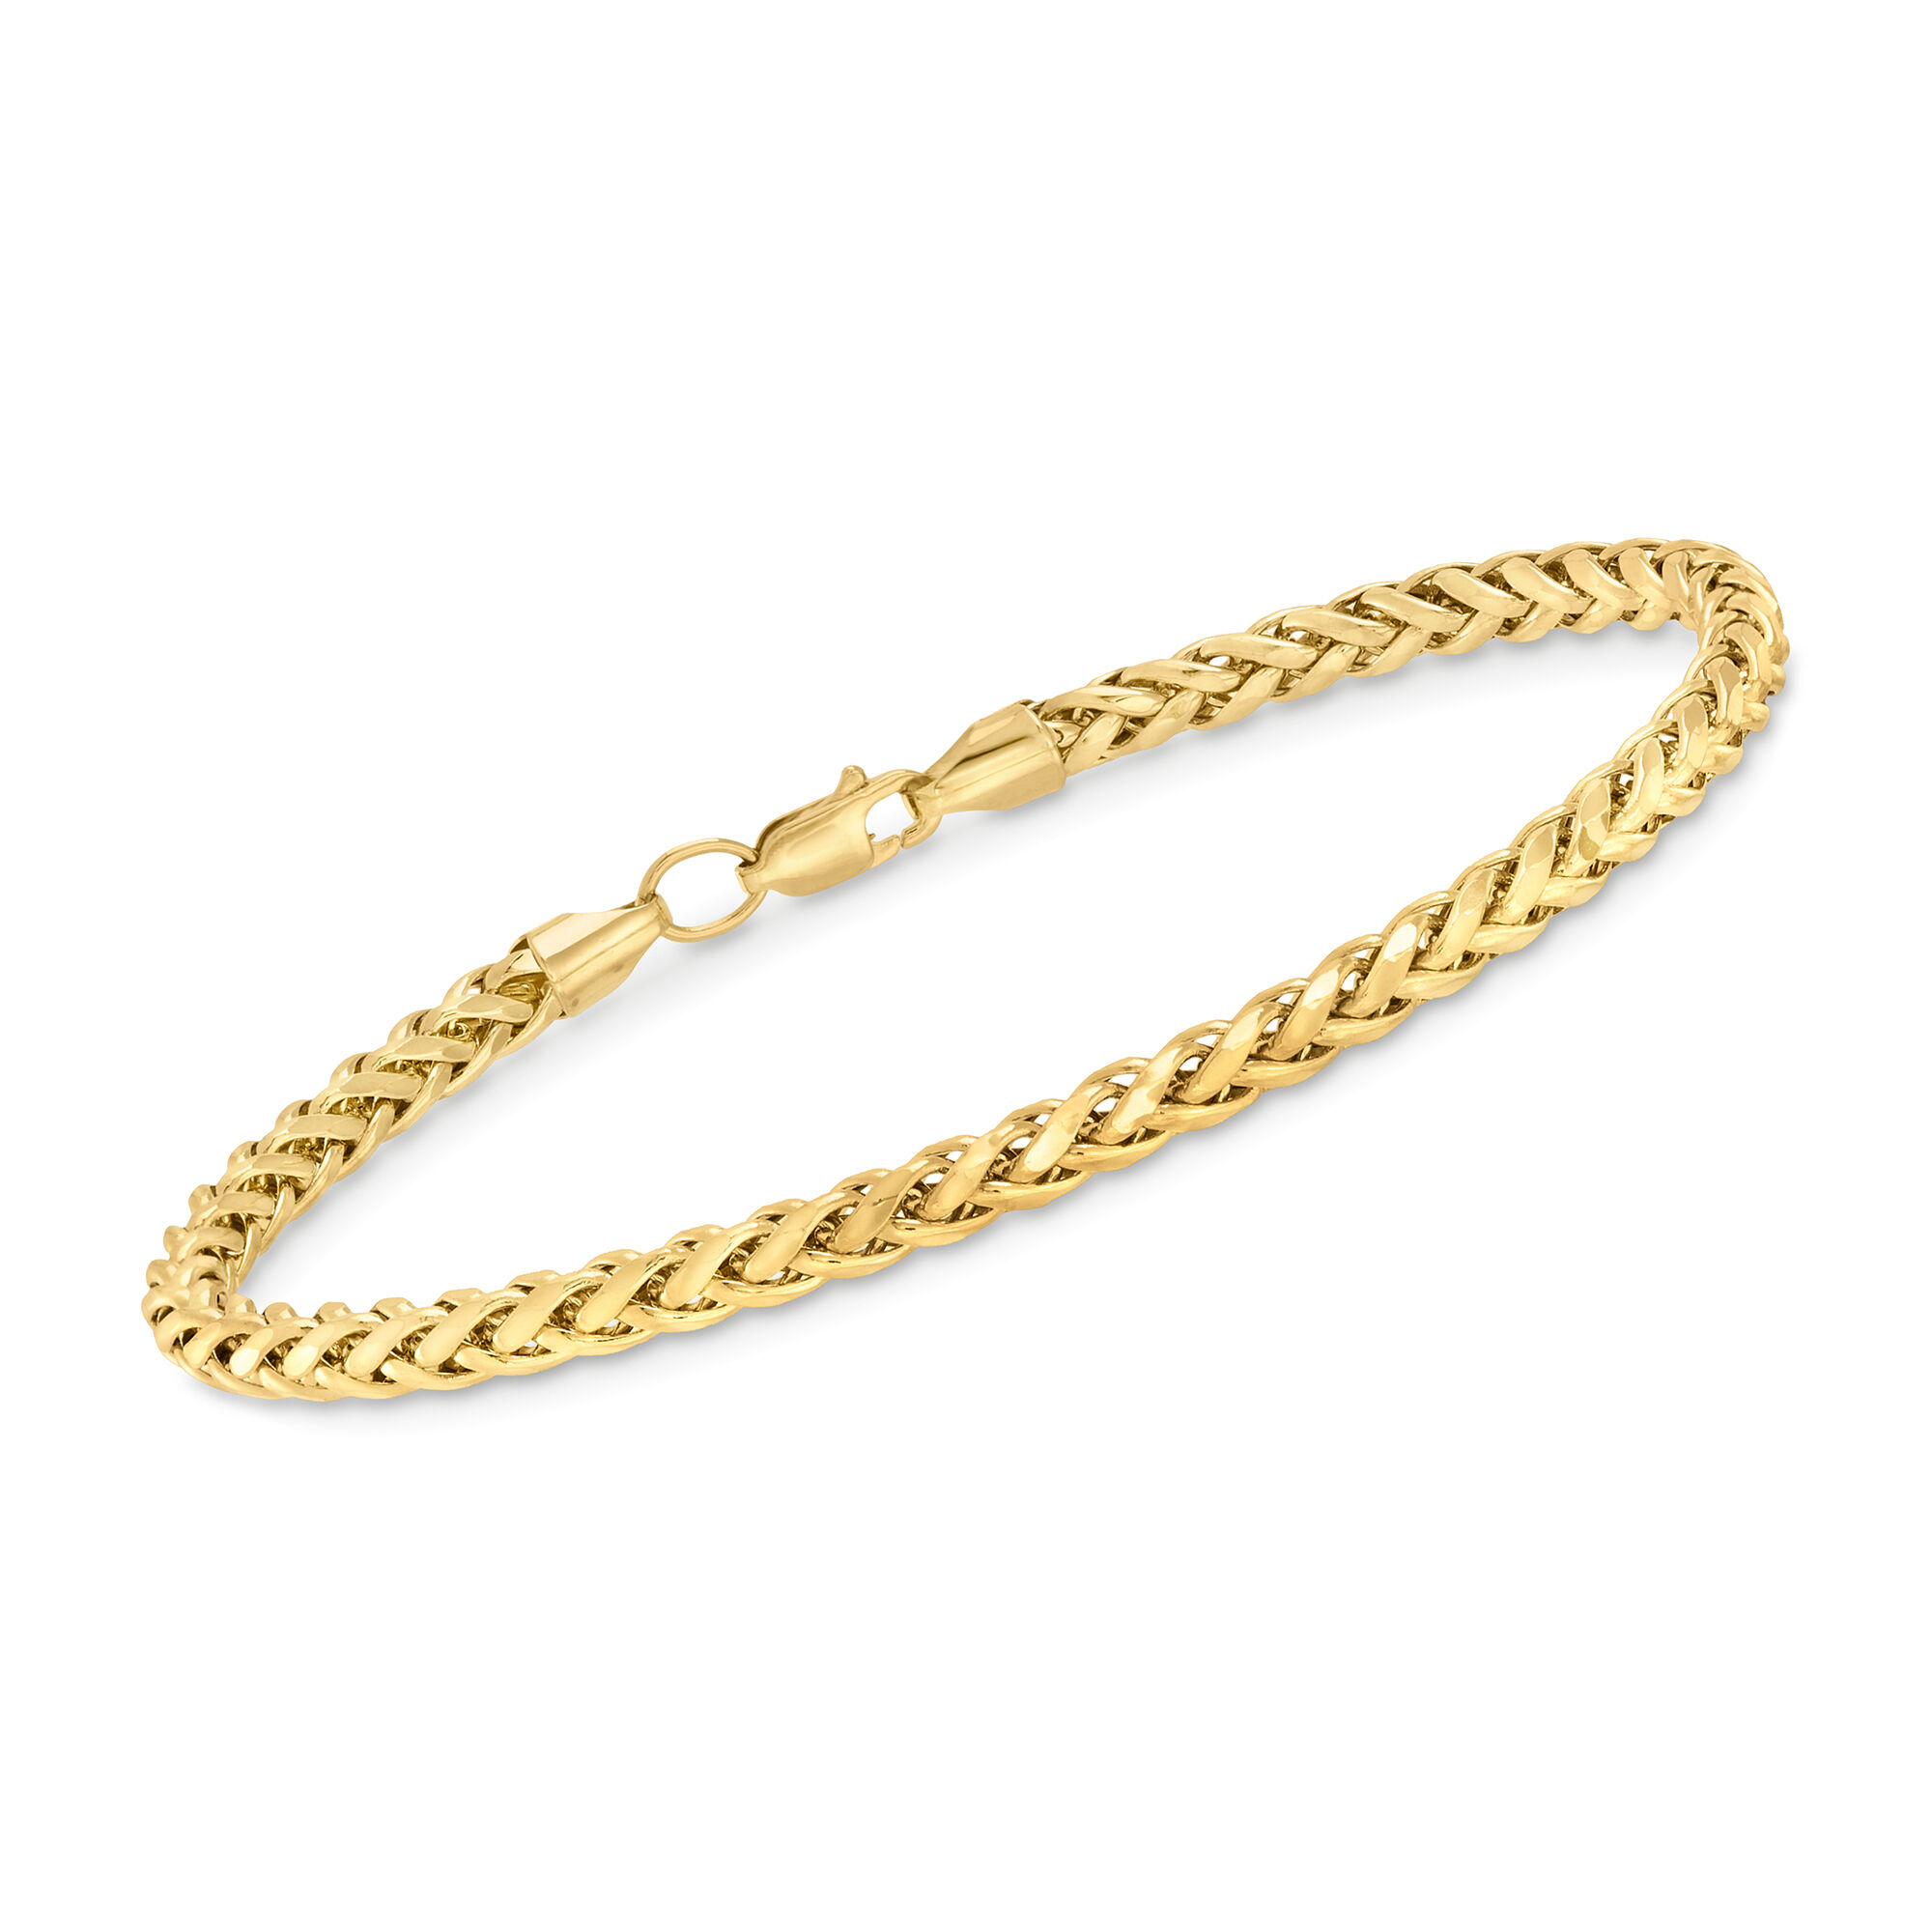 Men's 4mm 14kt Yellow Gold Wheat Chain Bracelet. 8